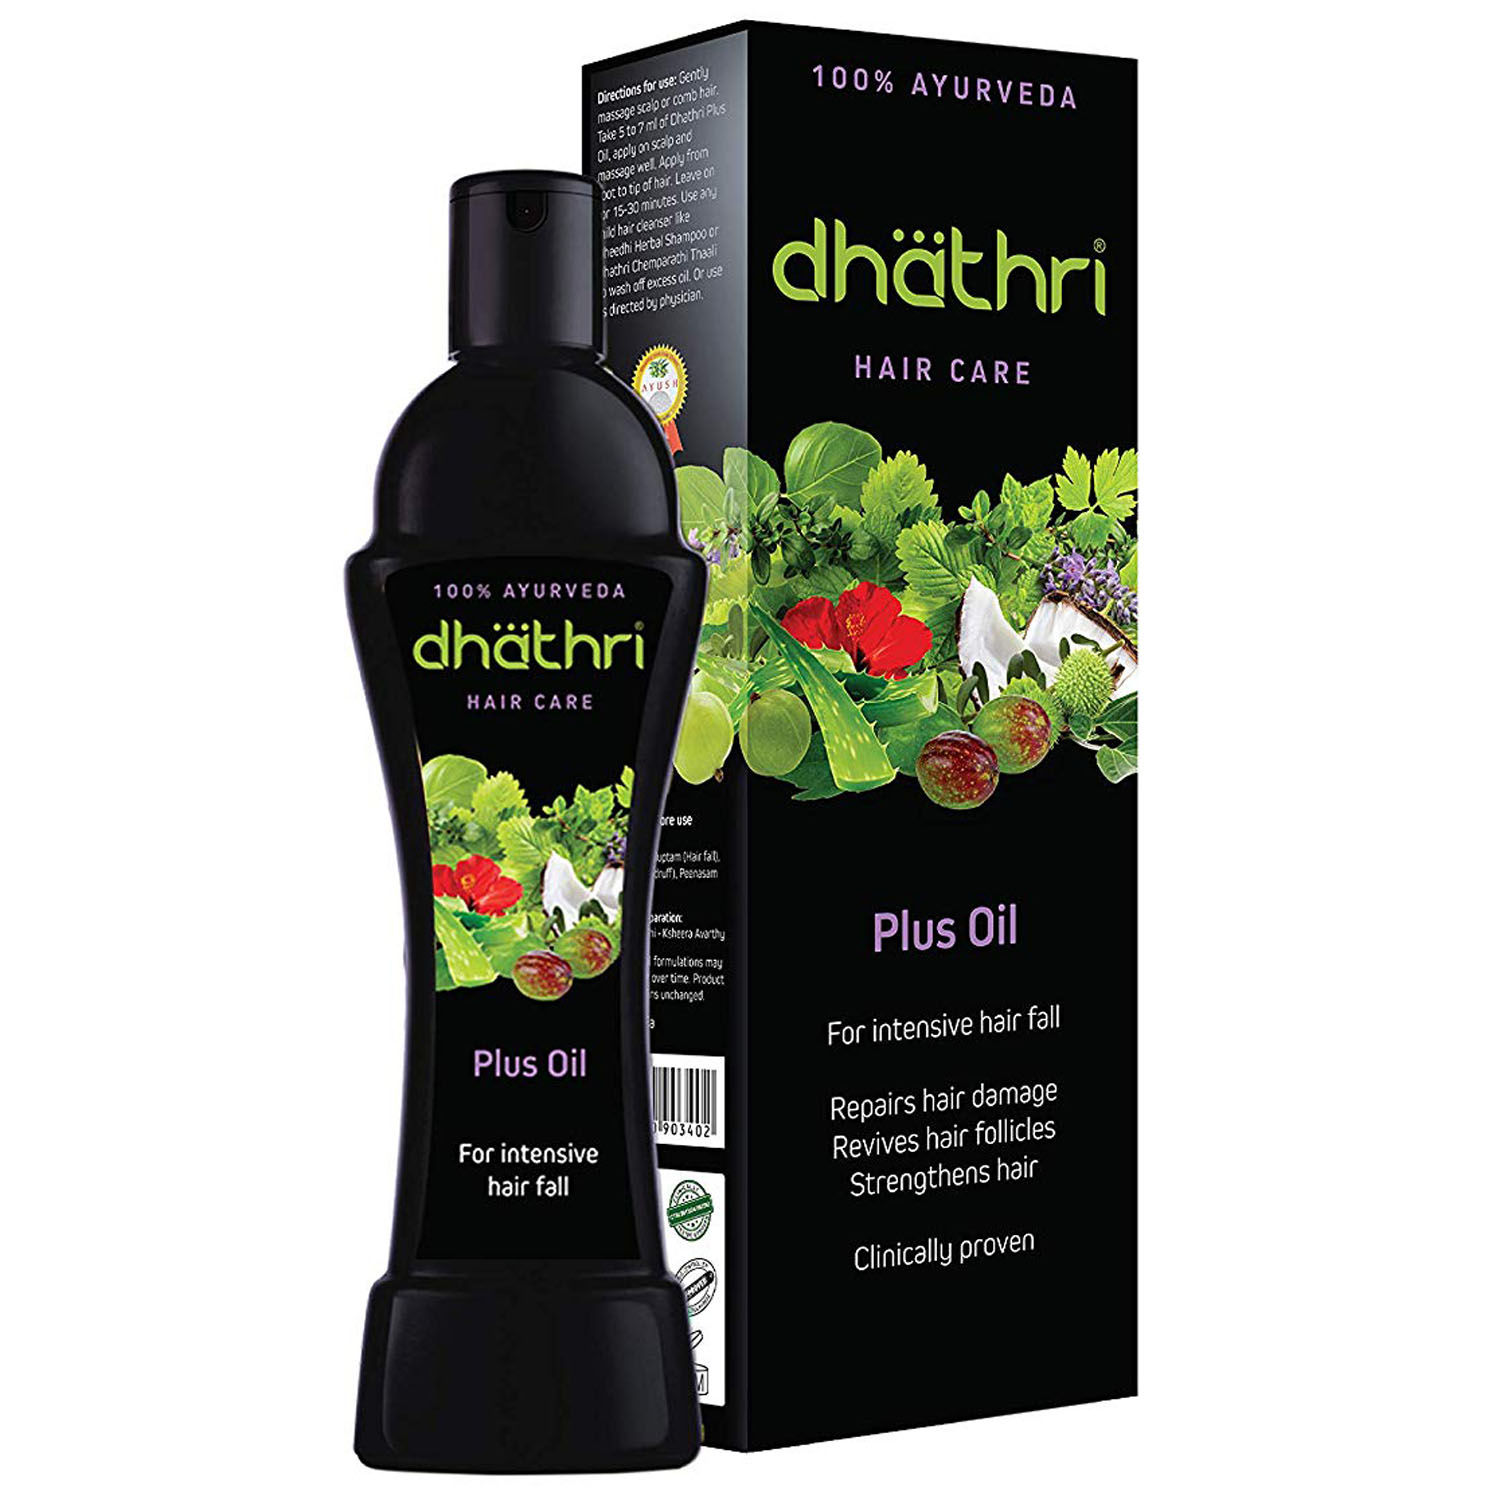 Dhathri Hair Care Plus Oil, 100 ml, Pack of 1 